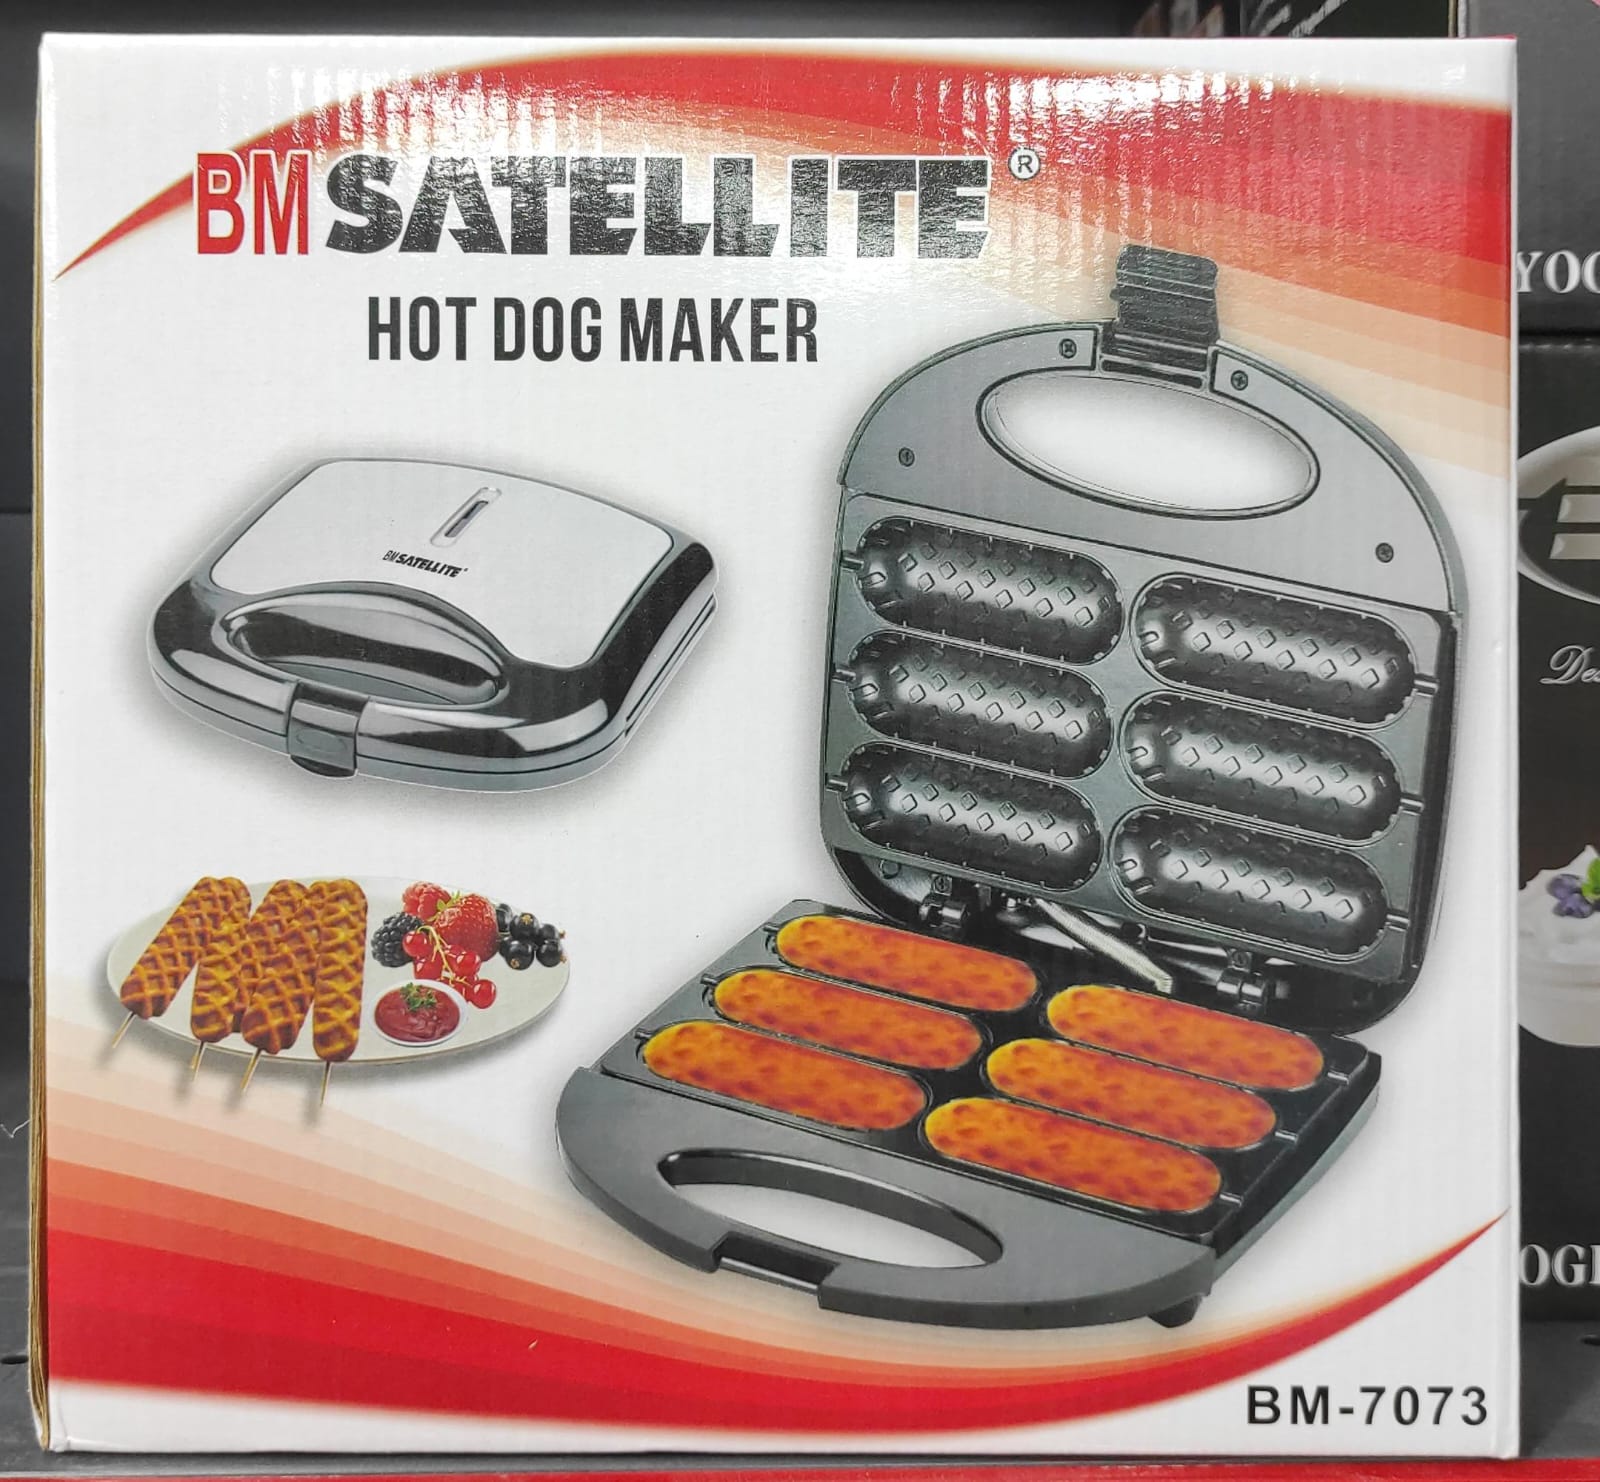 BM Satellite Hotdog Maker - Product Display